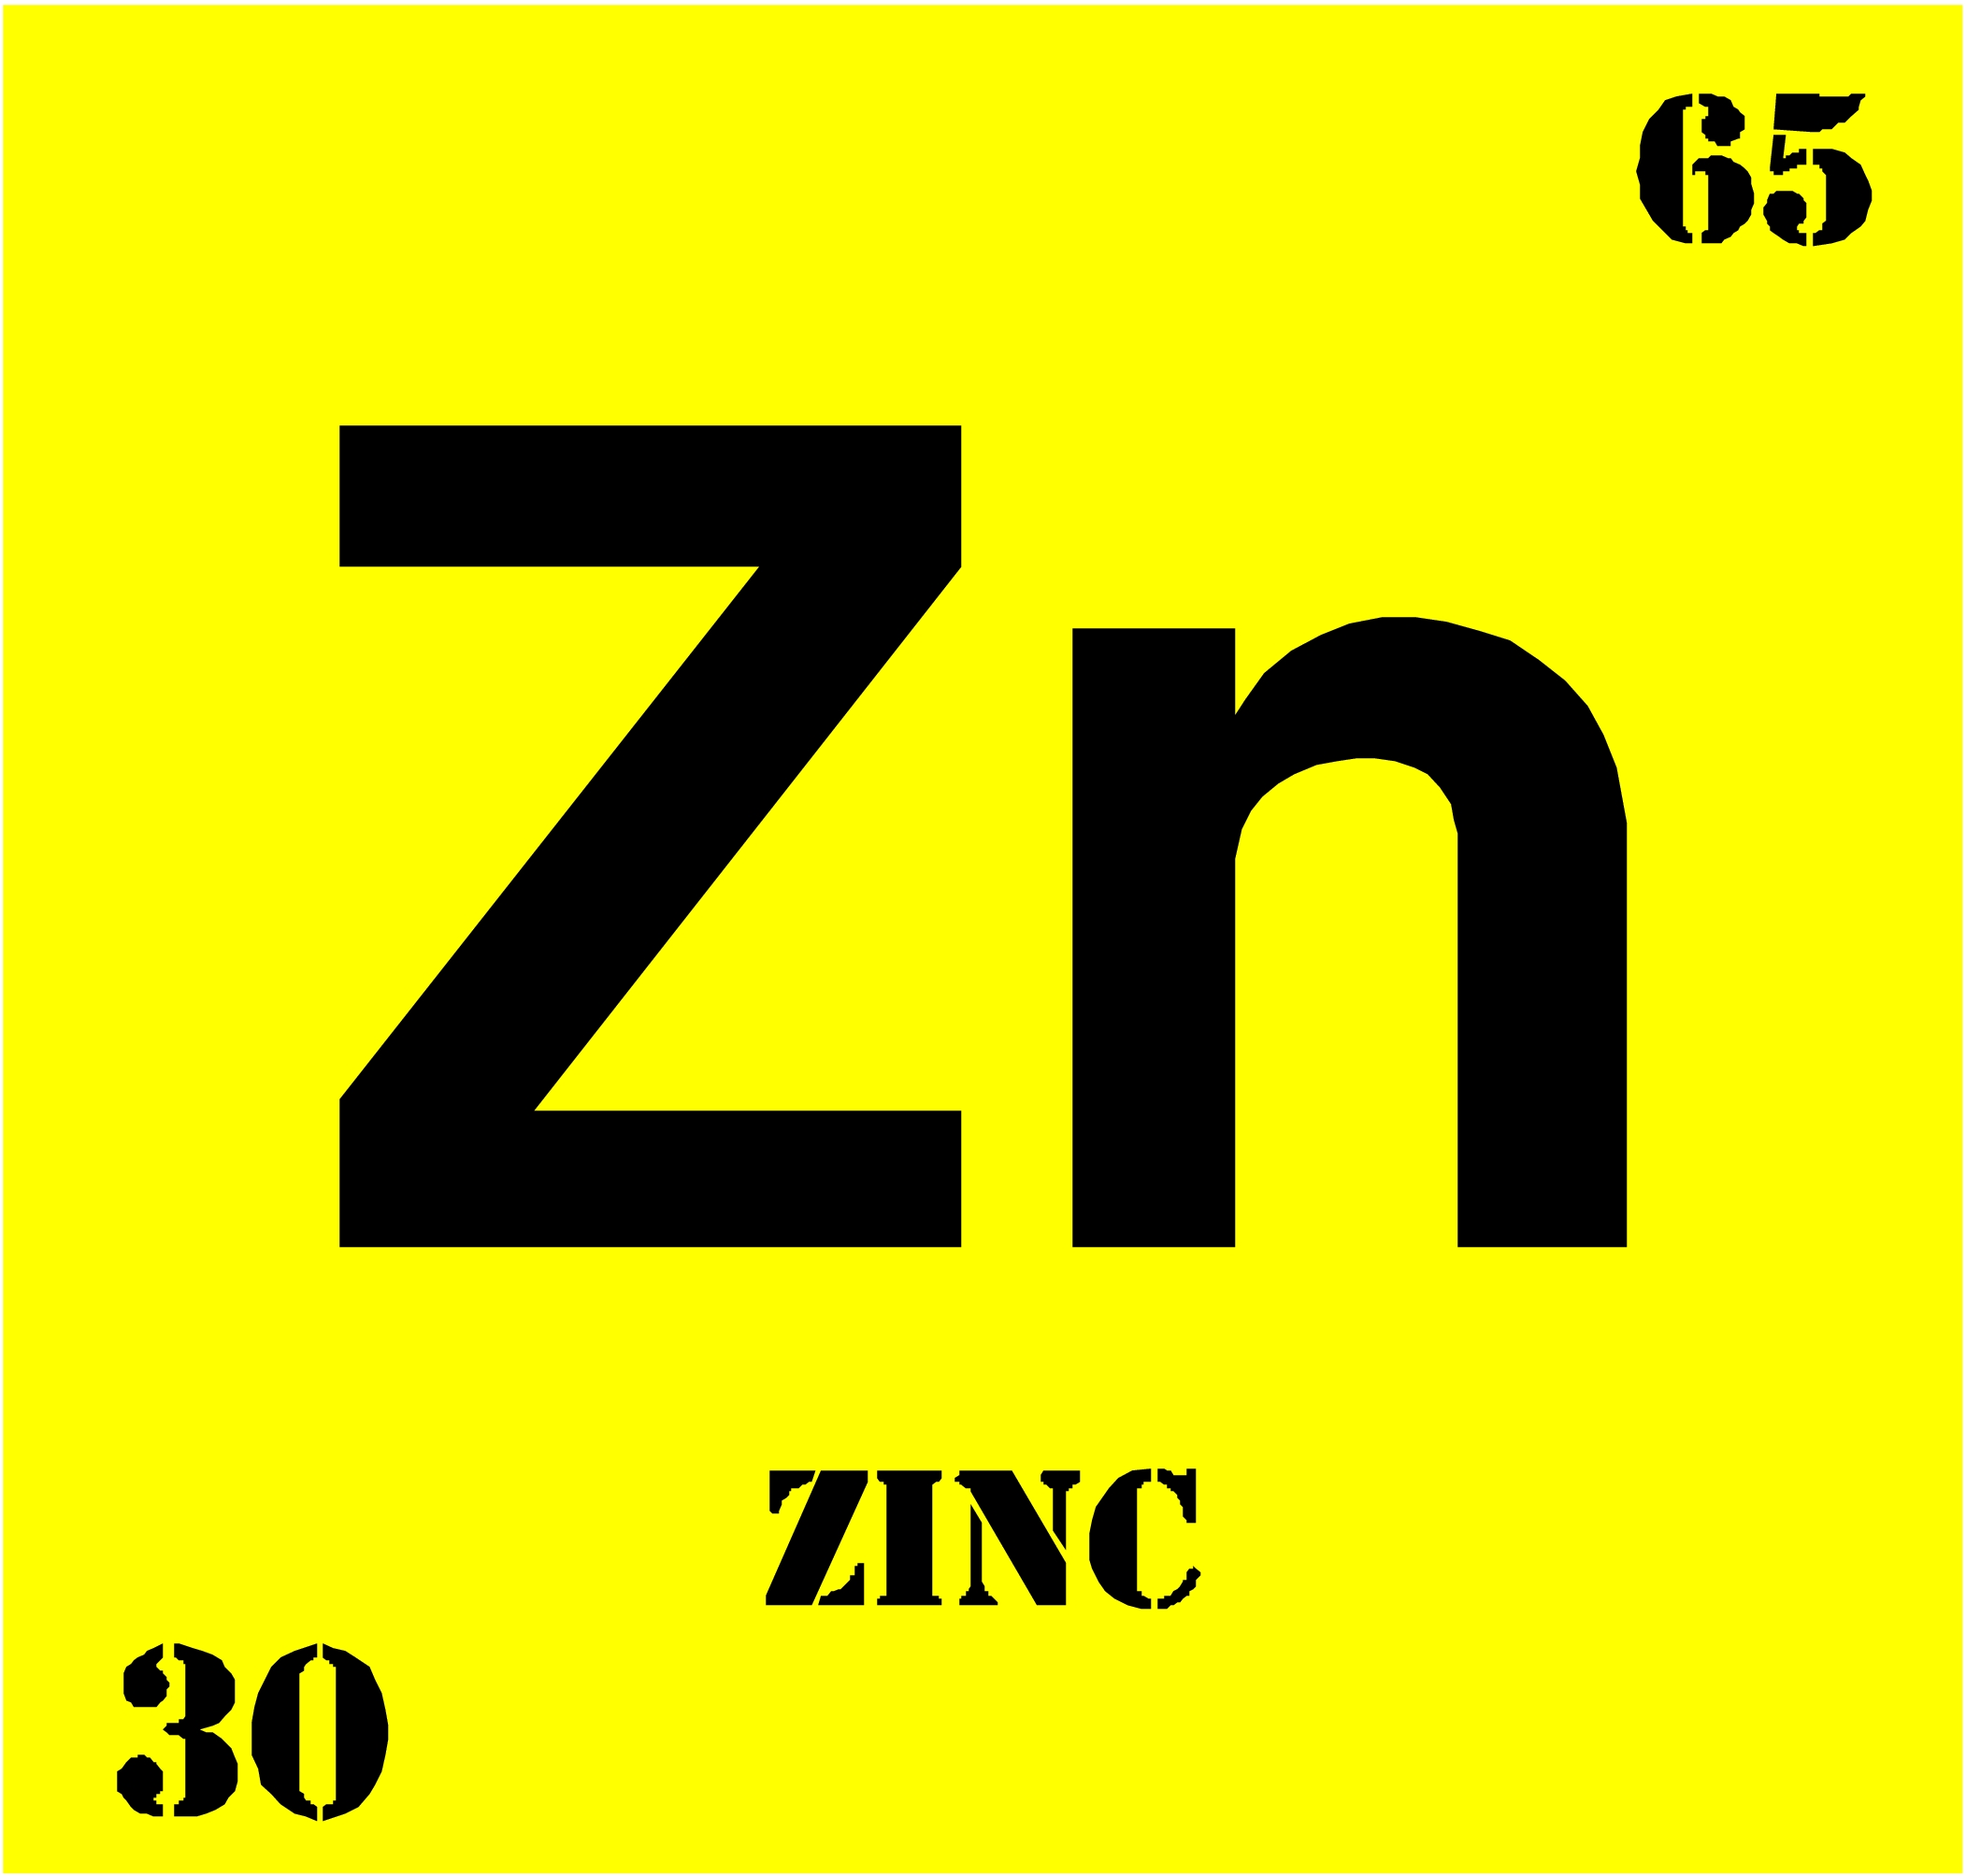 Zn ki. Цинк хим элемент. Цинк название элемента. Цинк химический элемент обозначение. Знак цинка в таблице Менделеева.